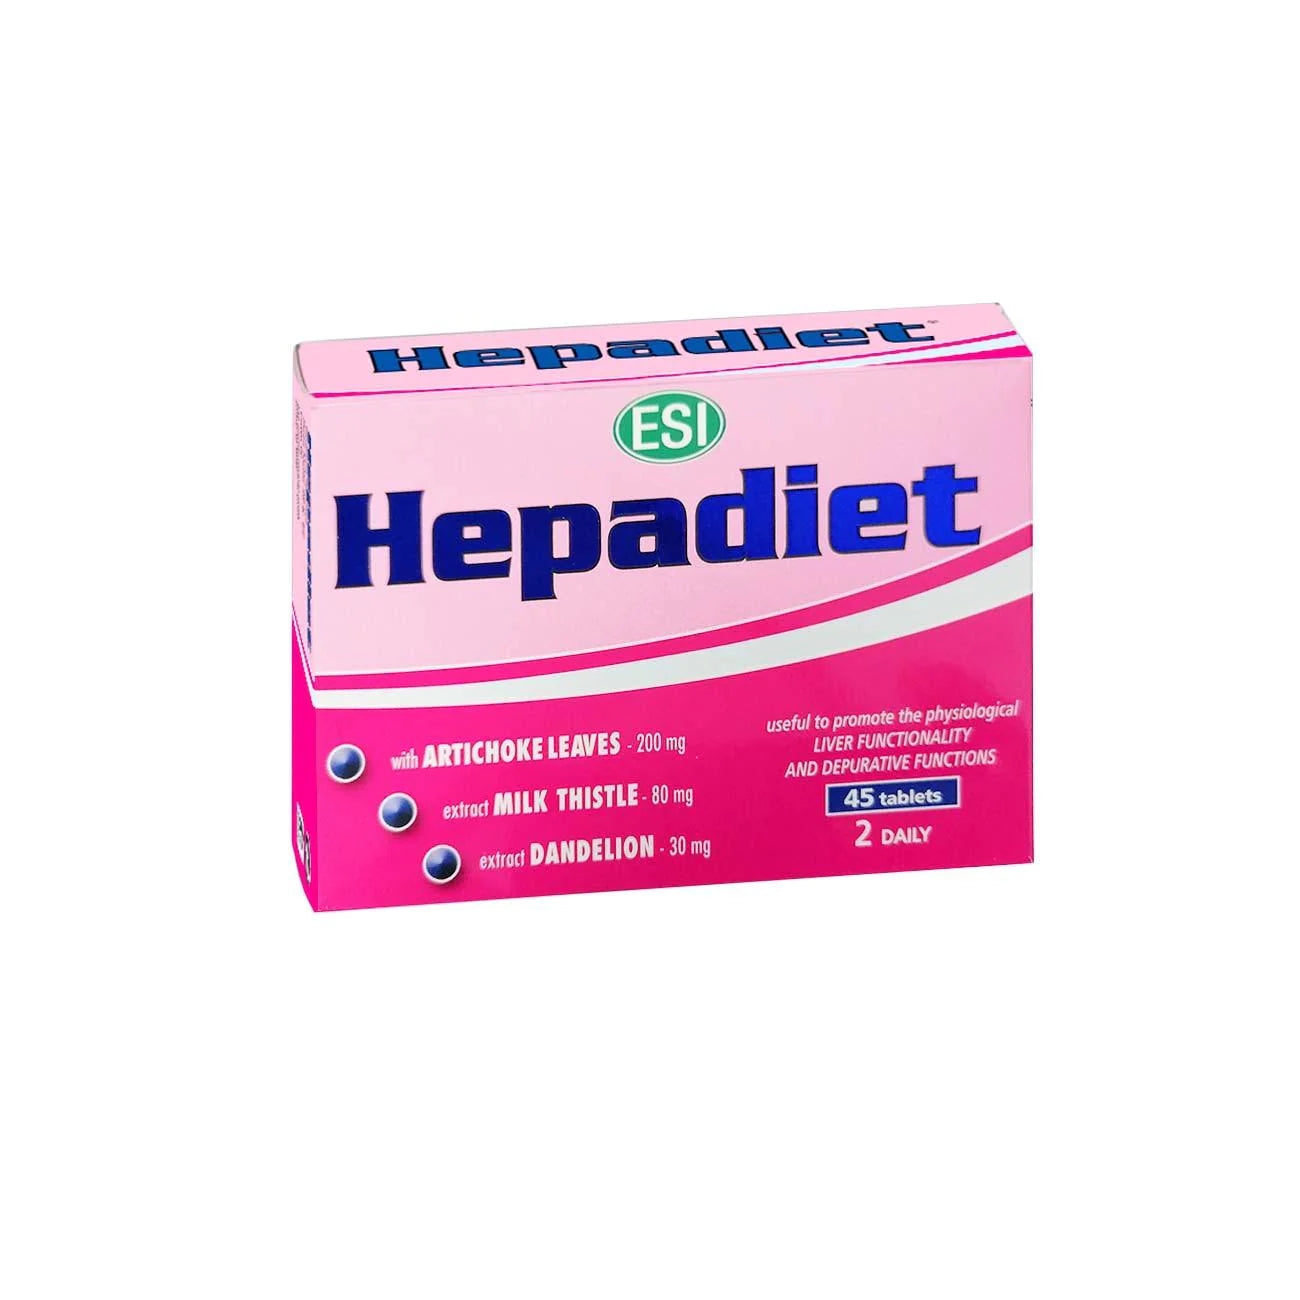 ESI Hepadiet – 45 tablets –